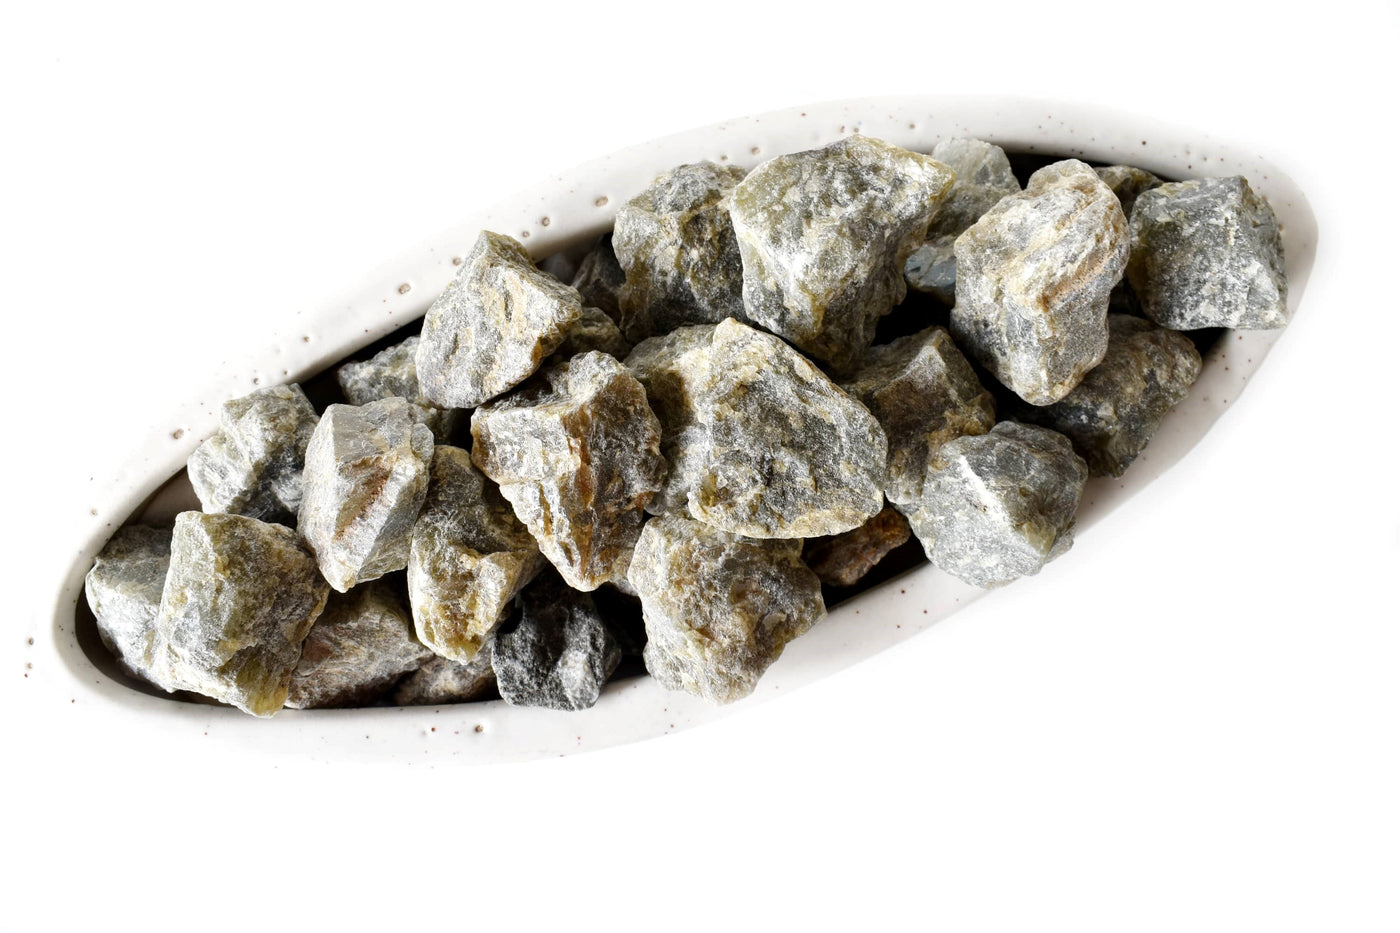 Labradorite Raw Stones (Meditate and Balance)